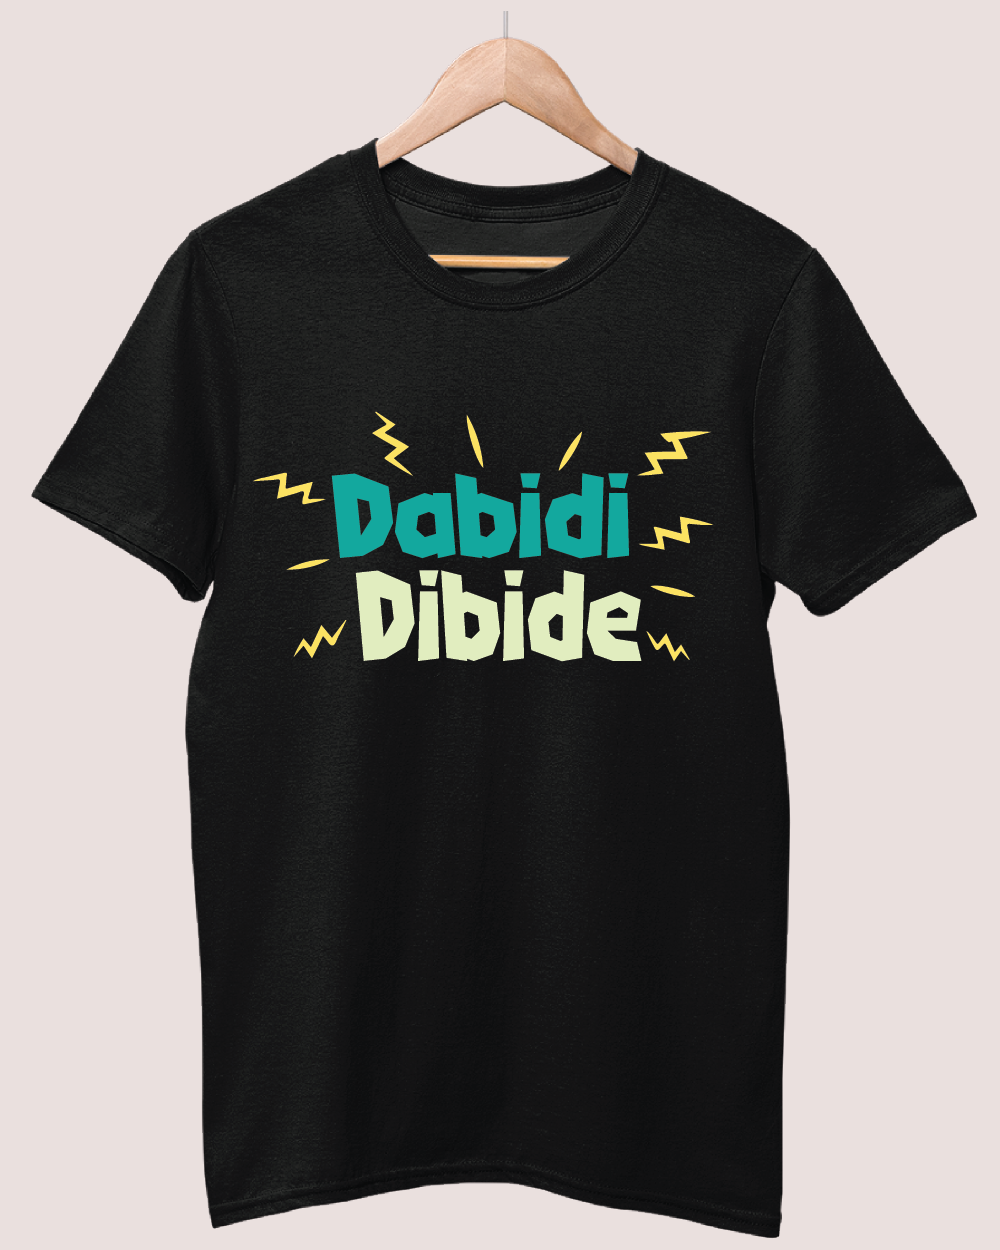 Dabidi Dibide T-shirt